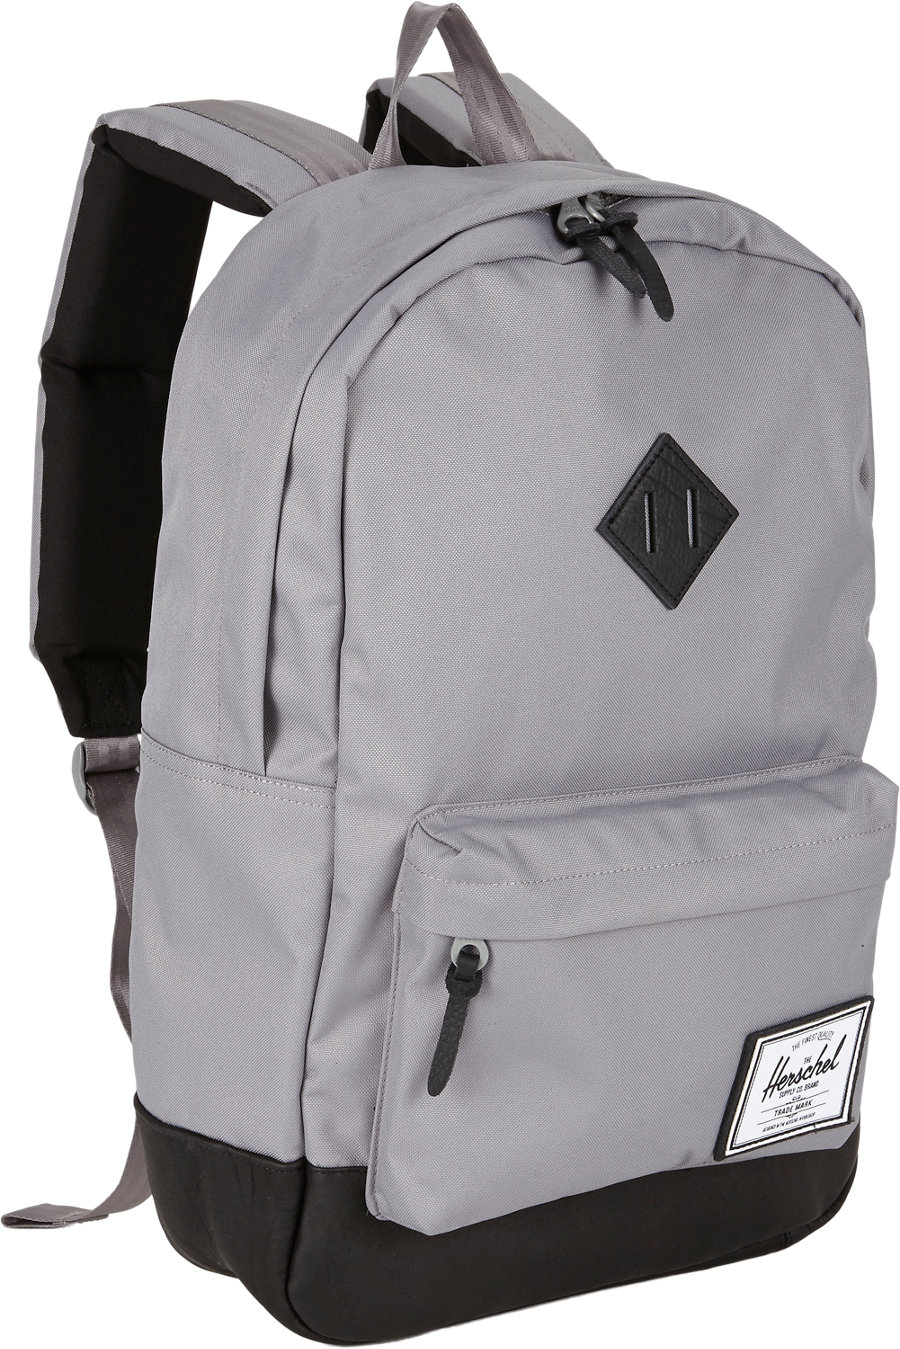 Herschel Supply Co. Backpack in Gray for Men - Lyst